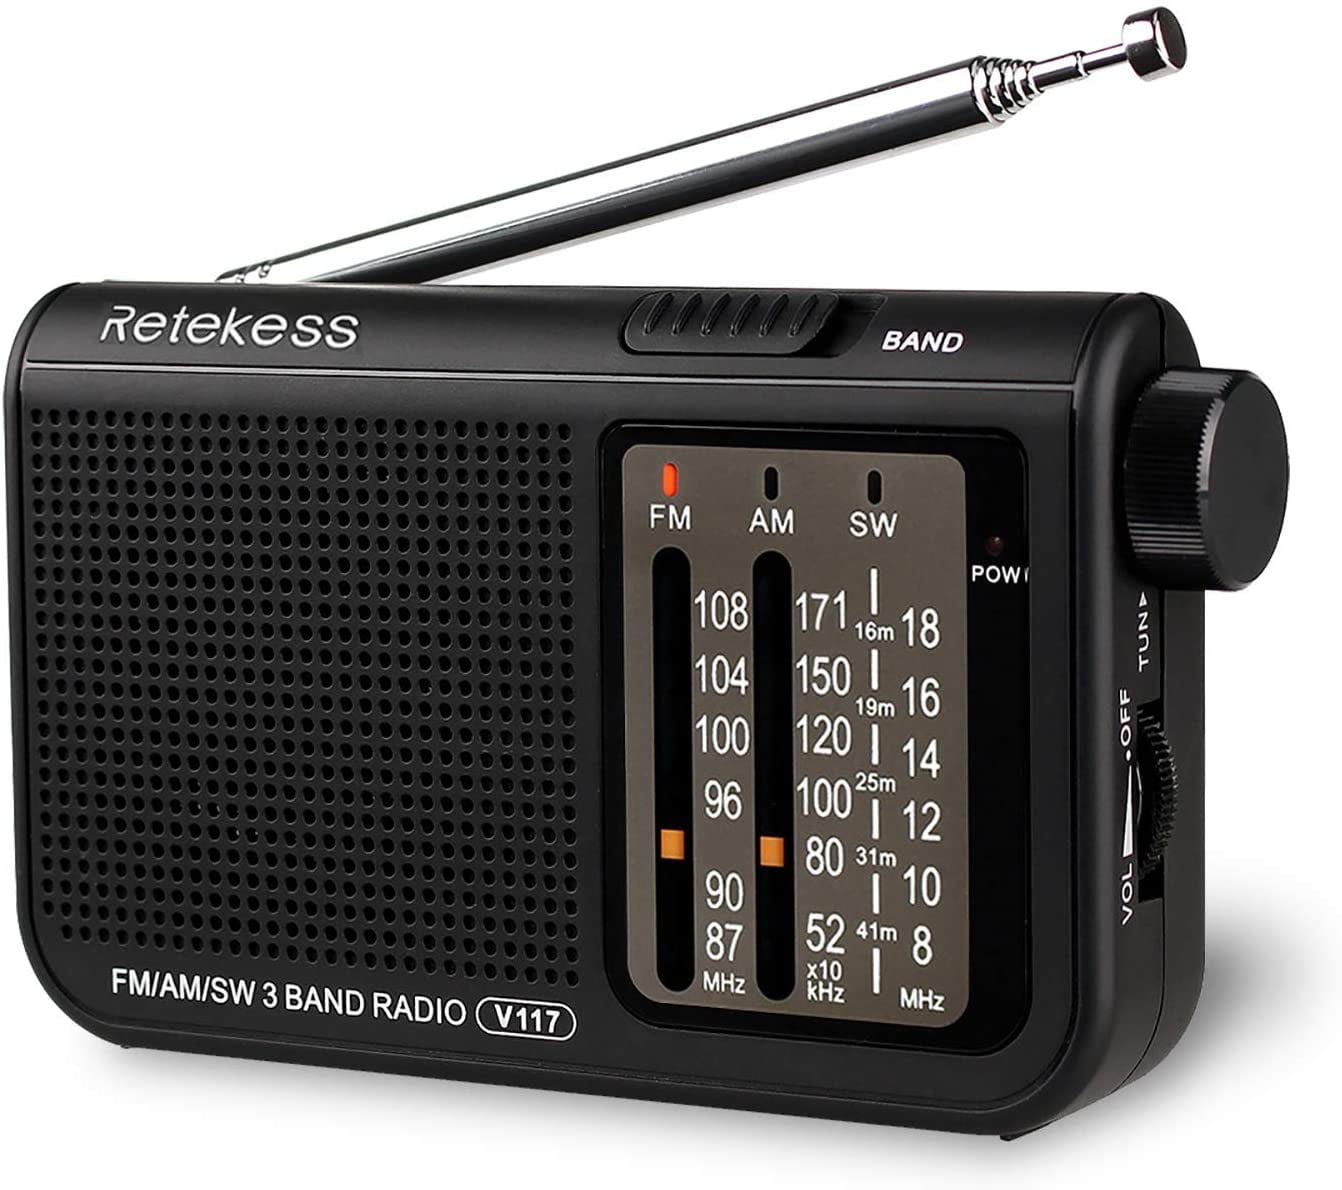 Philips Ae1500w Portable Radio Fm/am Analogue Tuning Ae1500 White